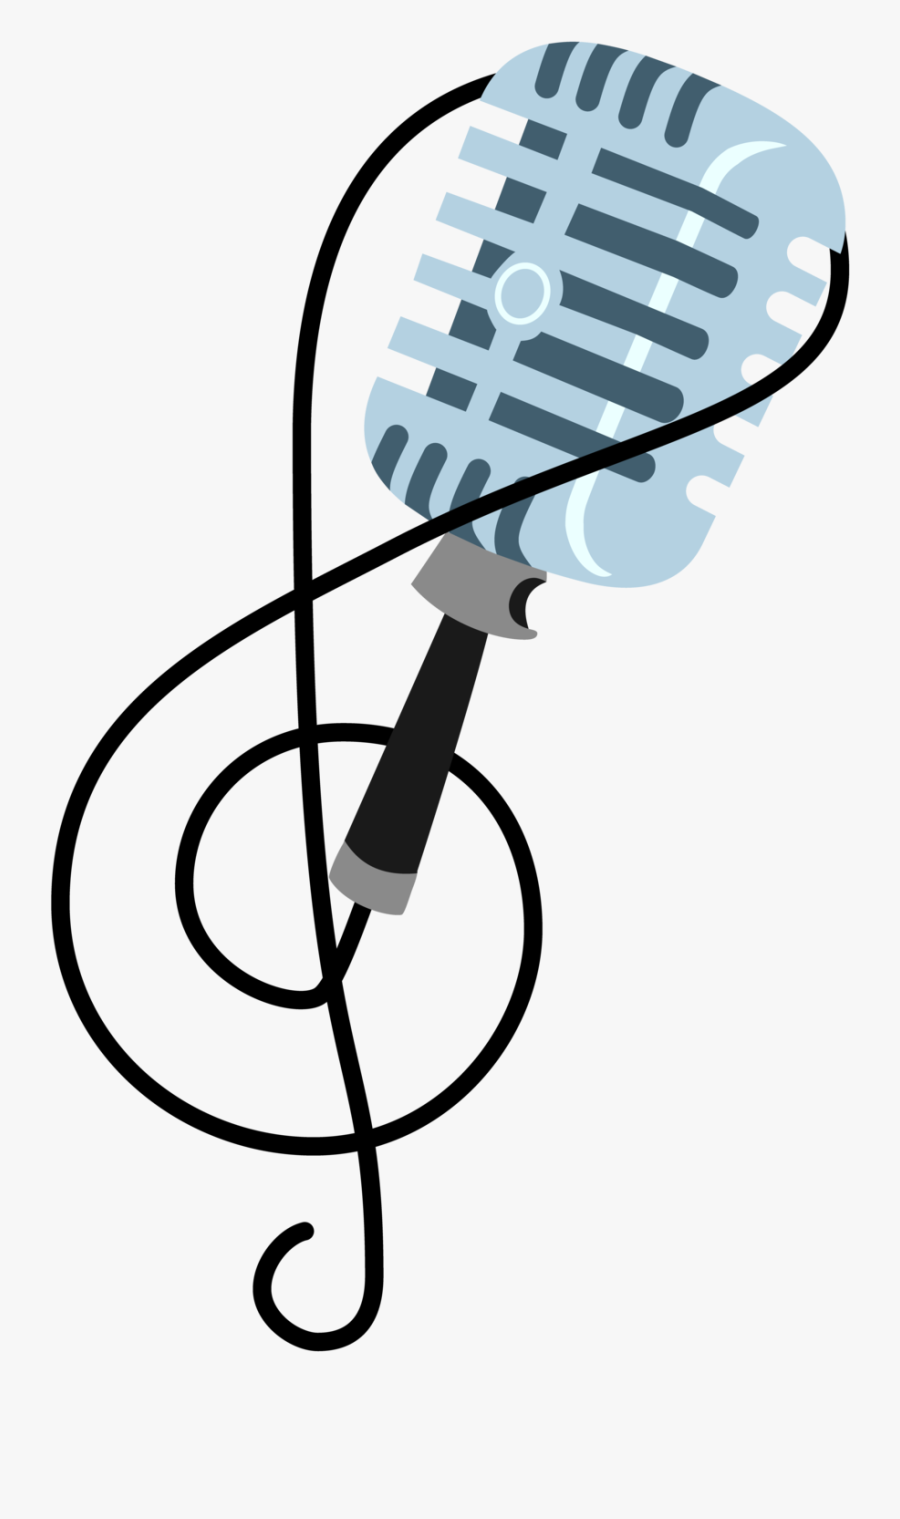 Microphone Clipart Cutie Mark - Mlp Microphone Cutie Mark, Transparent Clipart